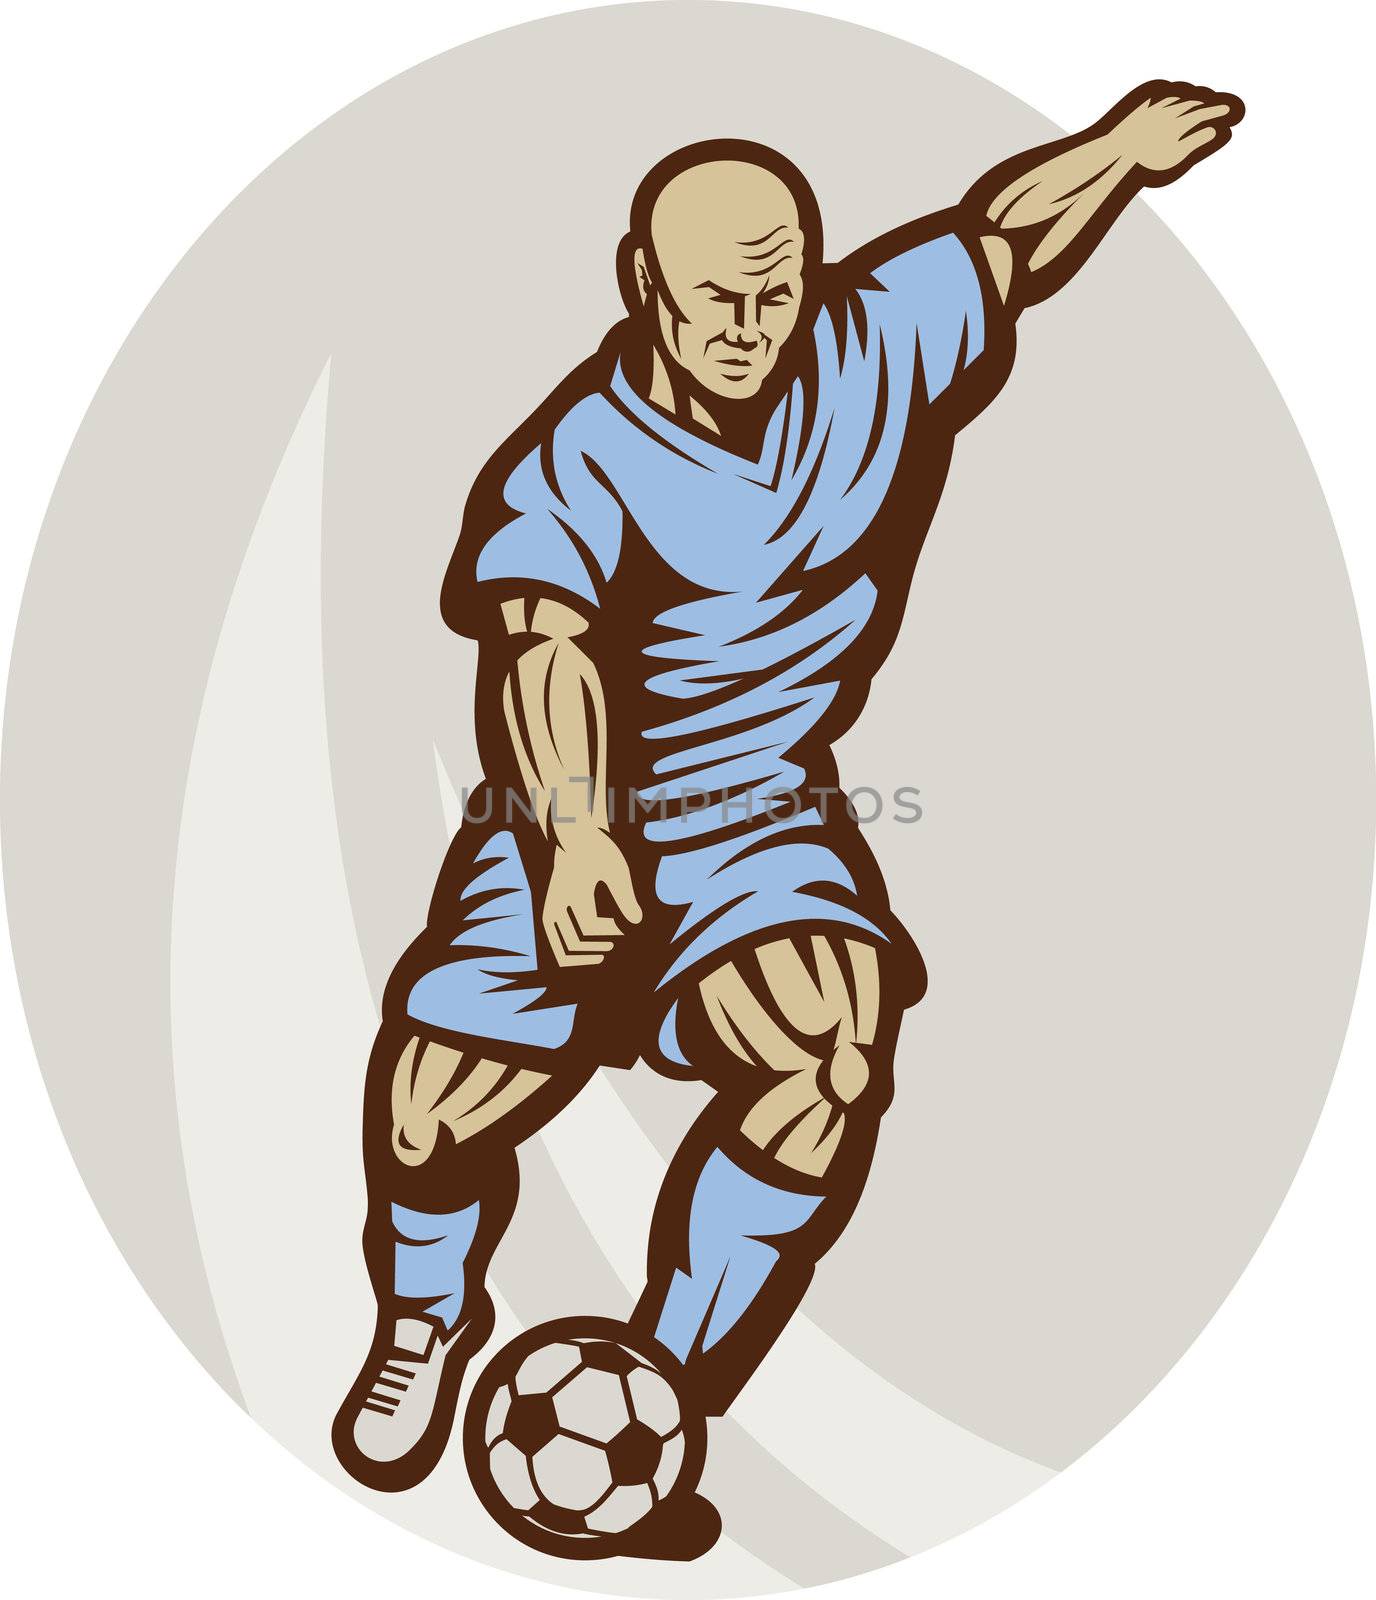 Soccer player kicking the ball  by patrimonio